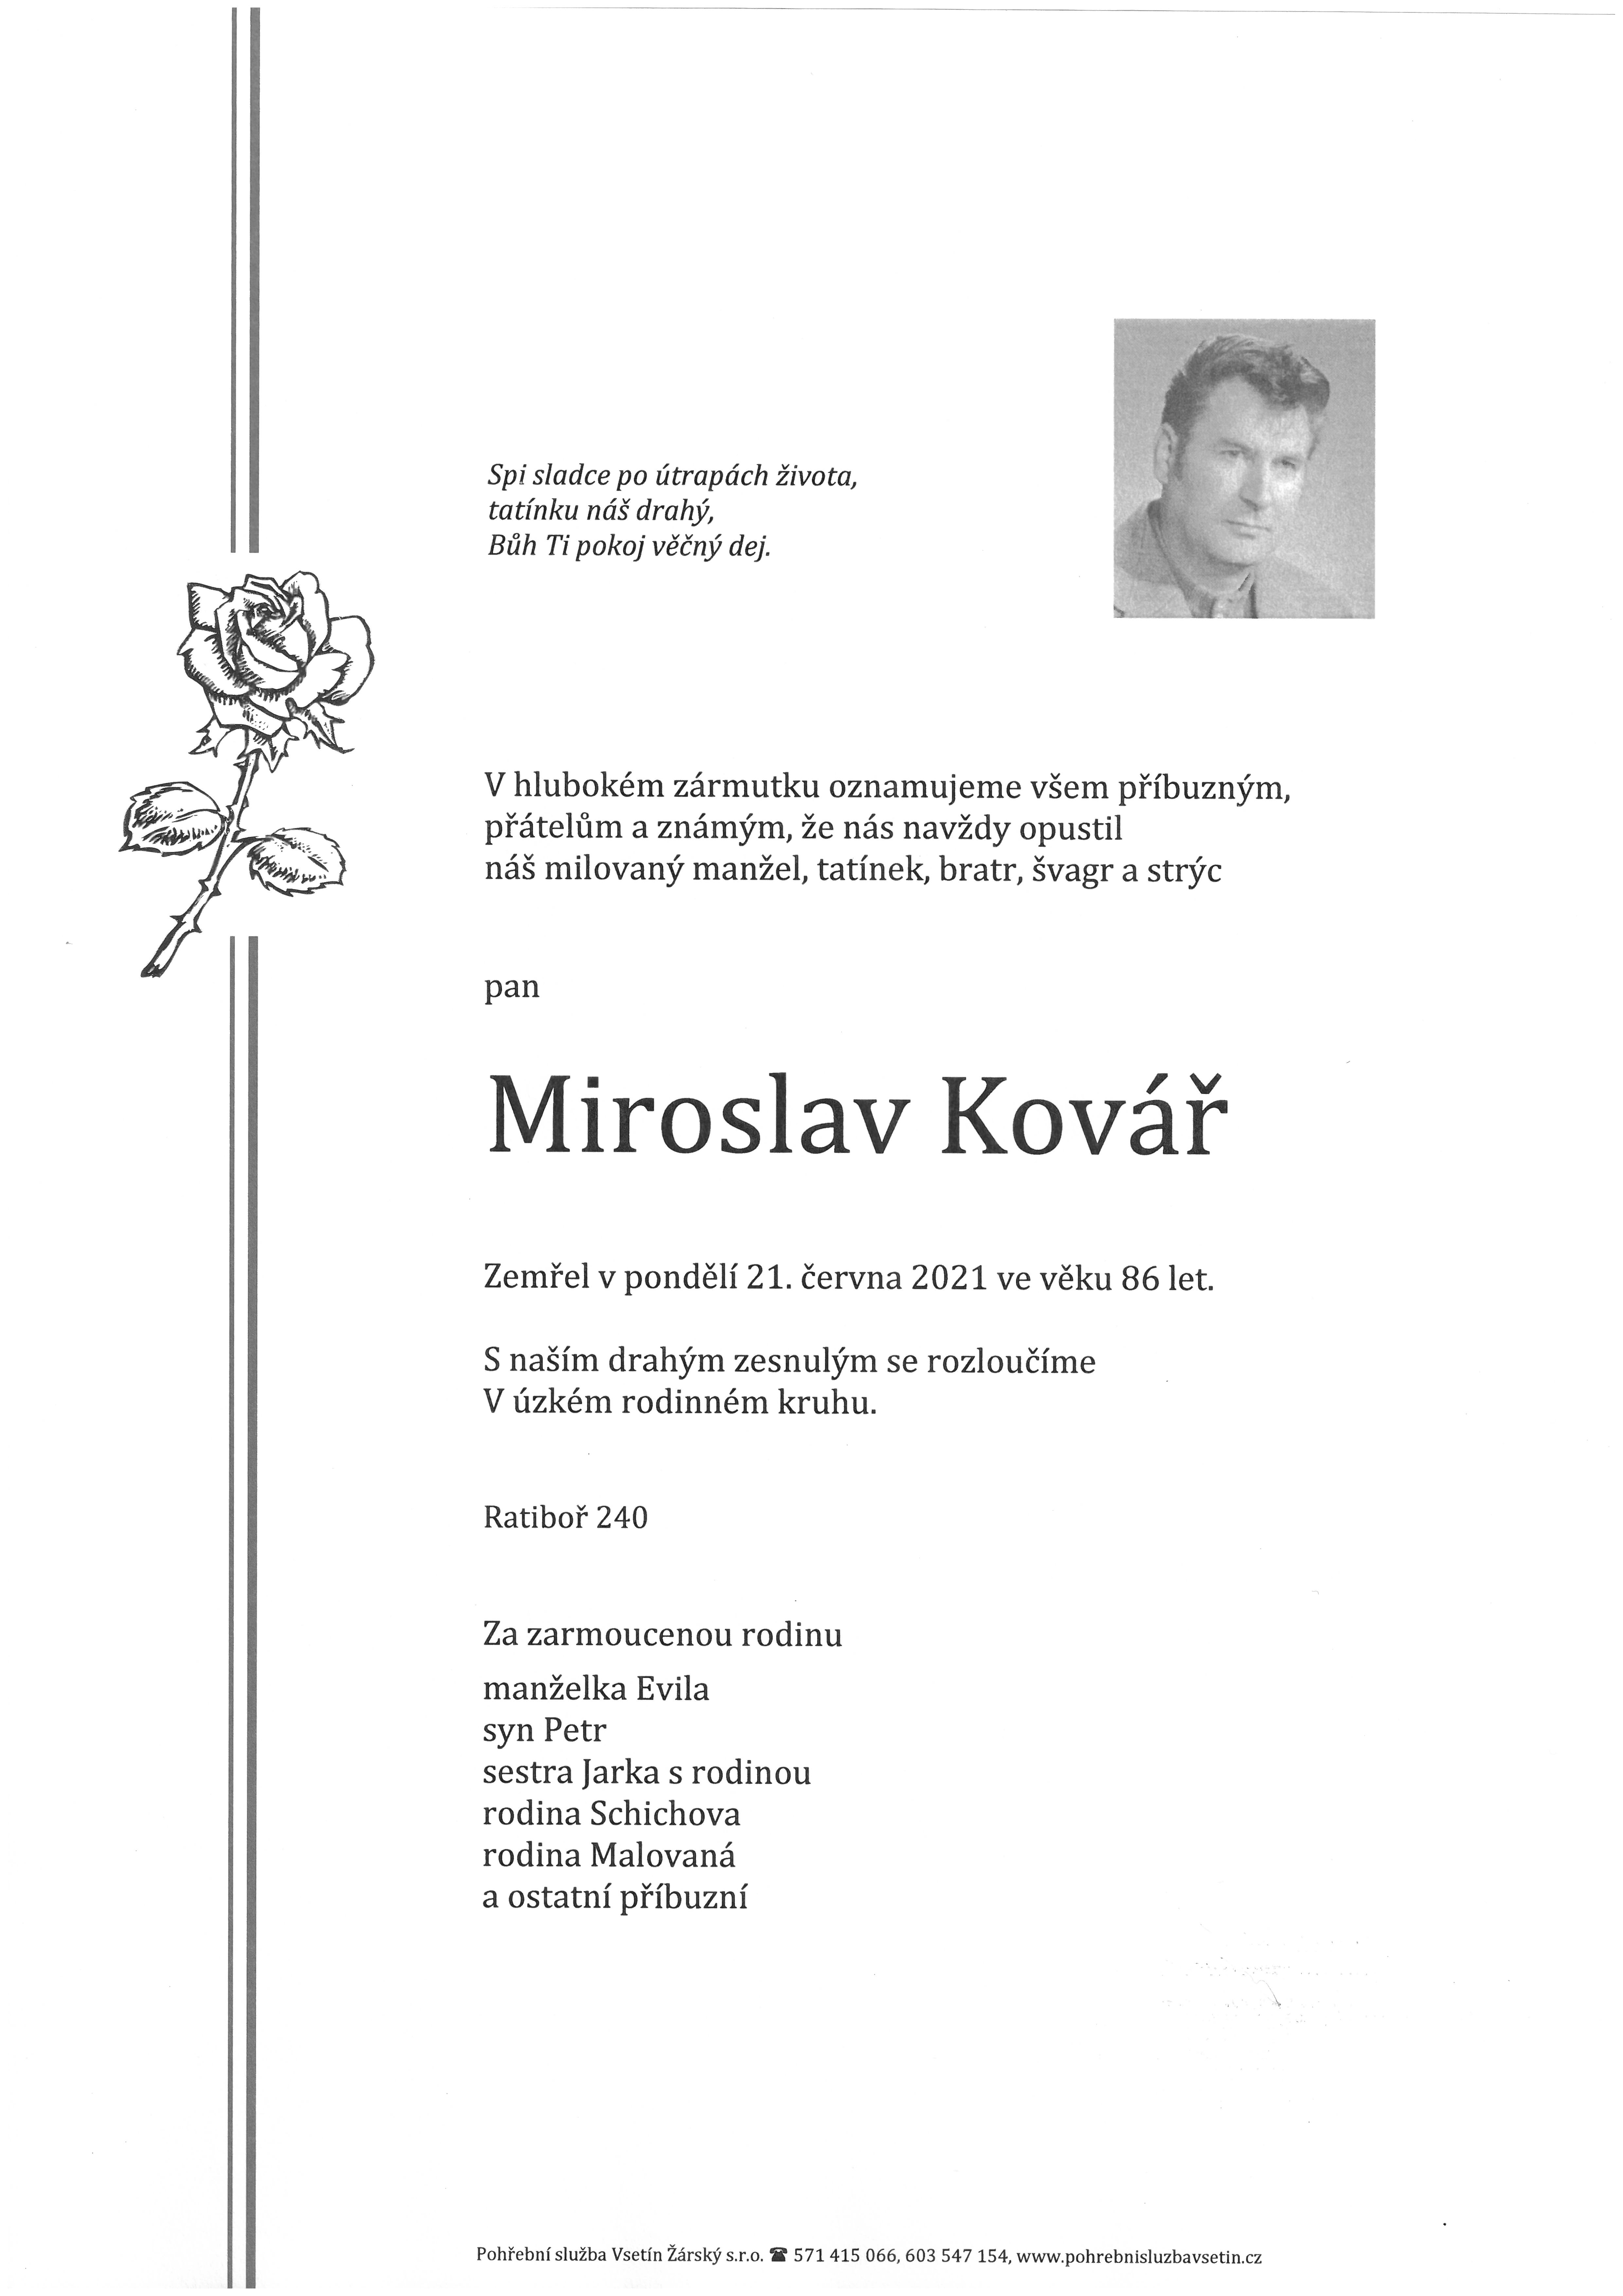 Miroslav Kovář